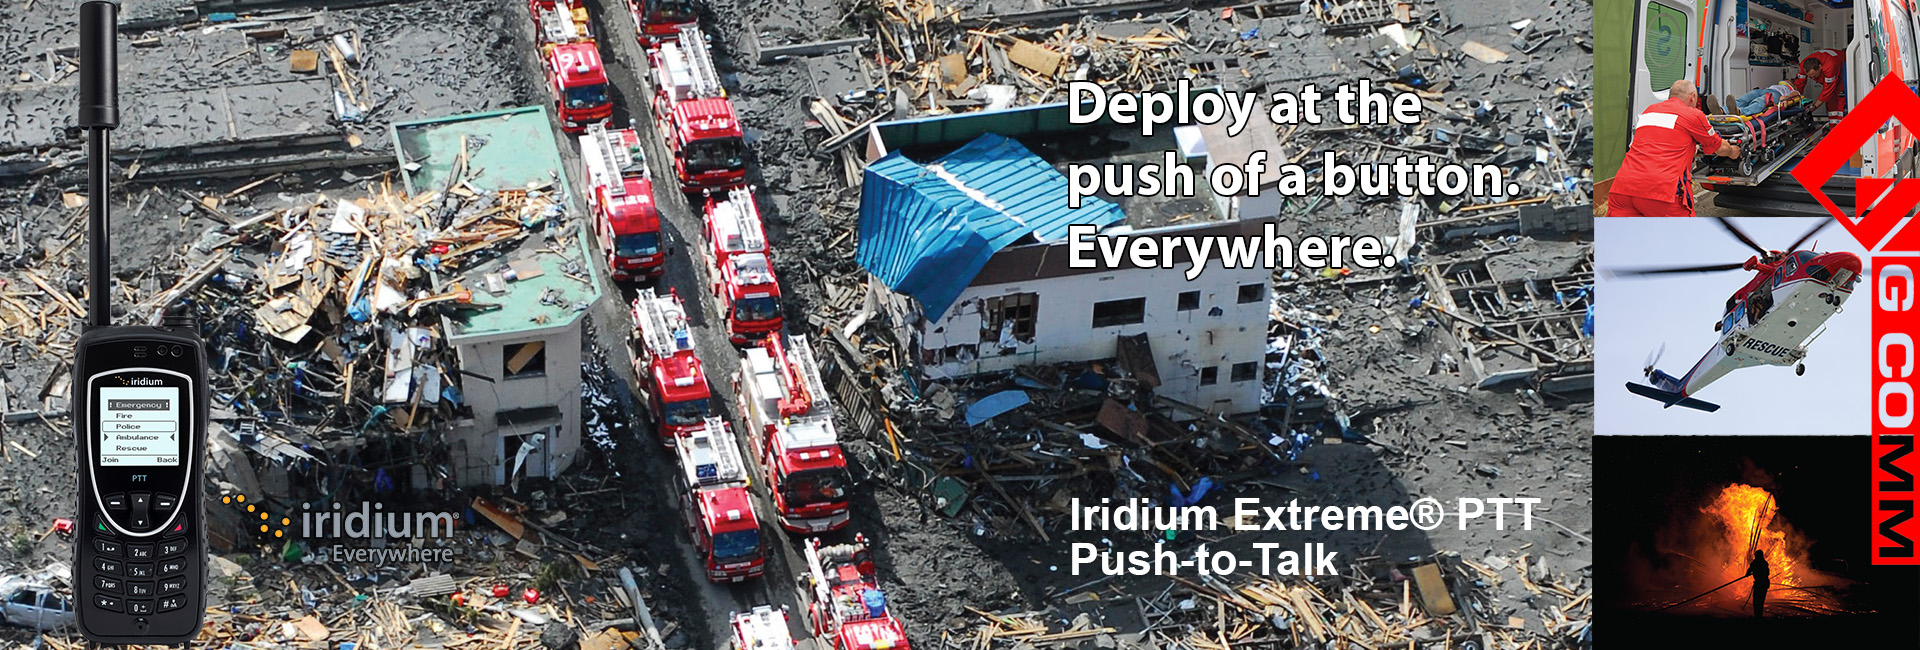 Iridium PTT disaster background